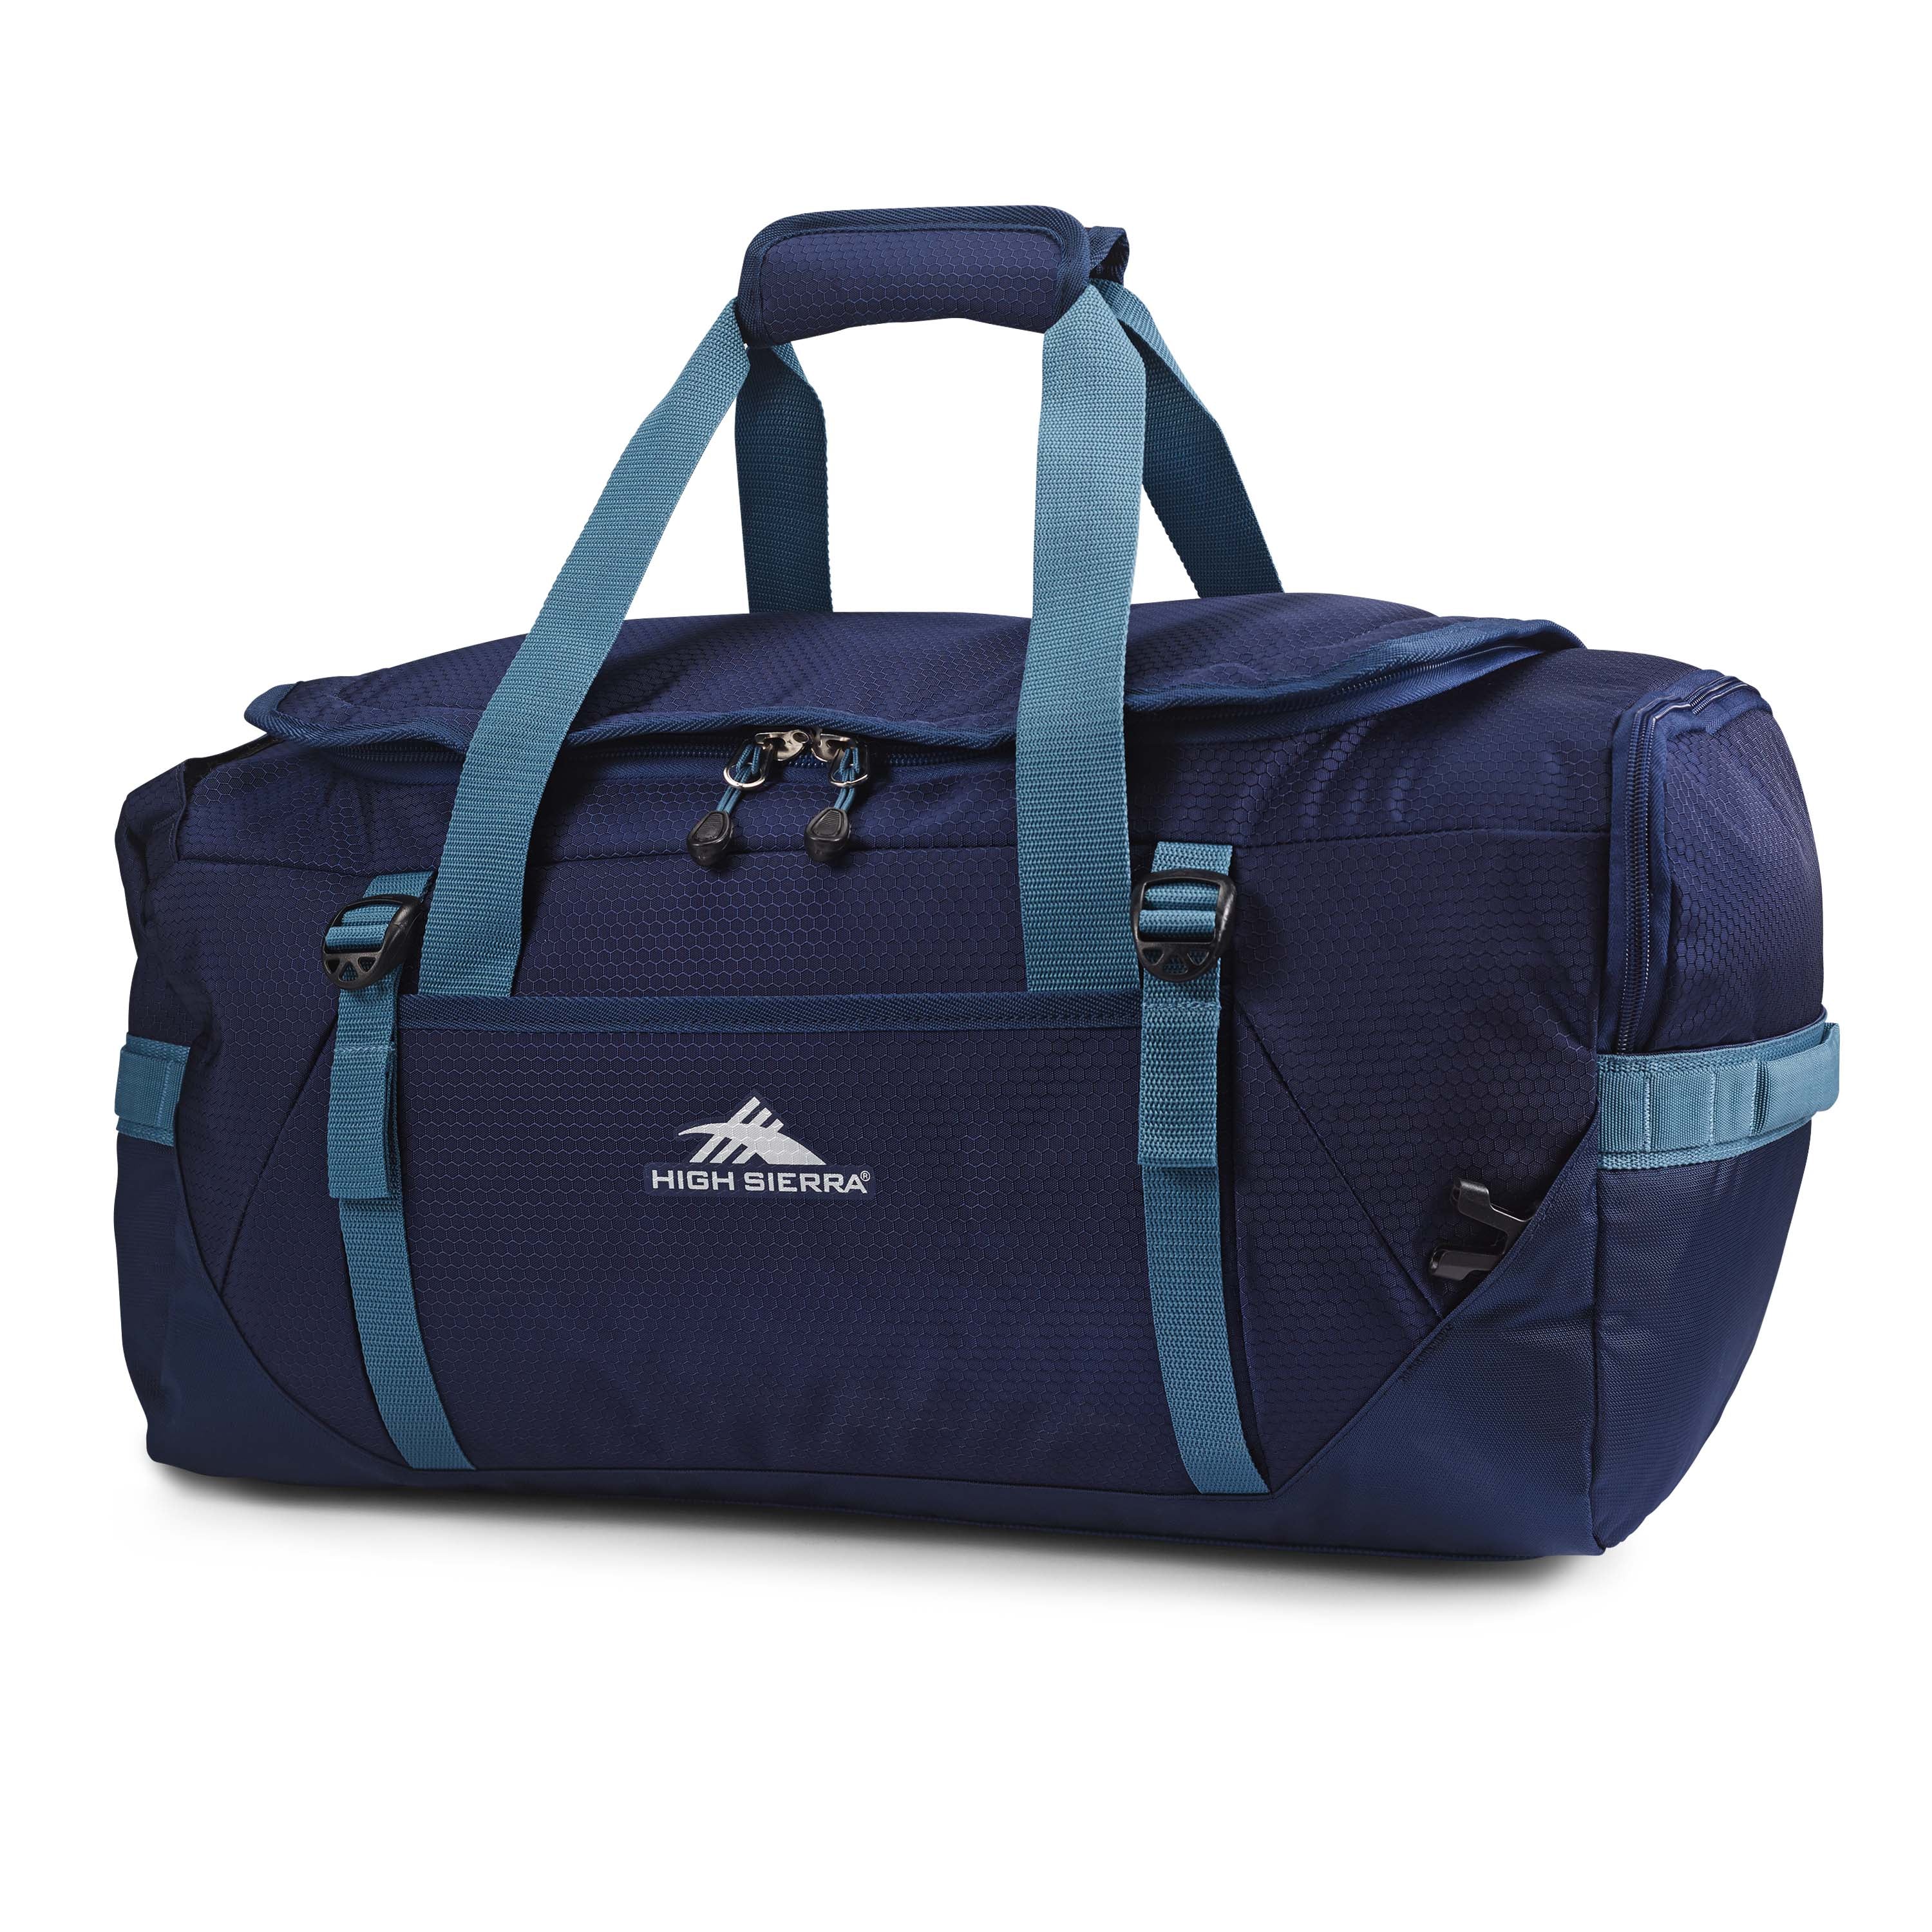 High Sierra - Convertable Backpack-Duffle - Navy-Graphite Blue